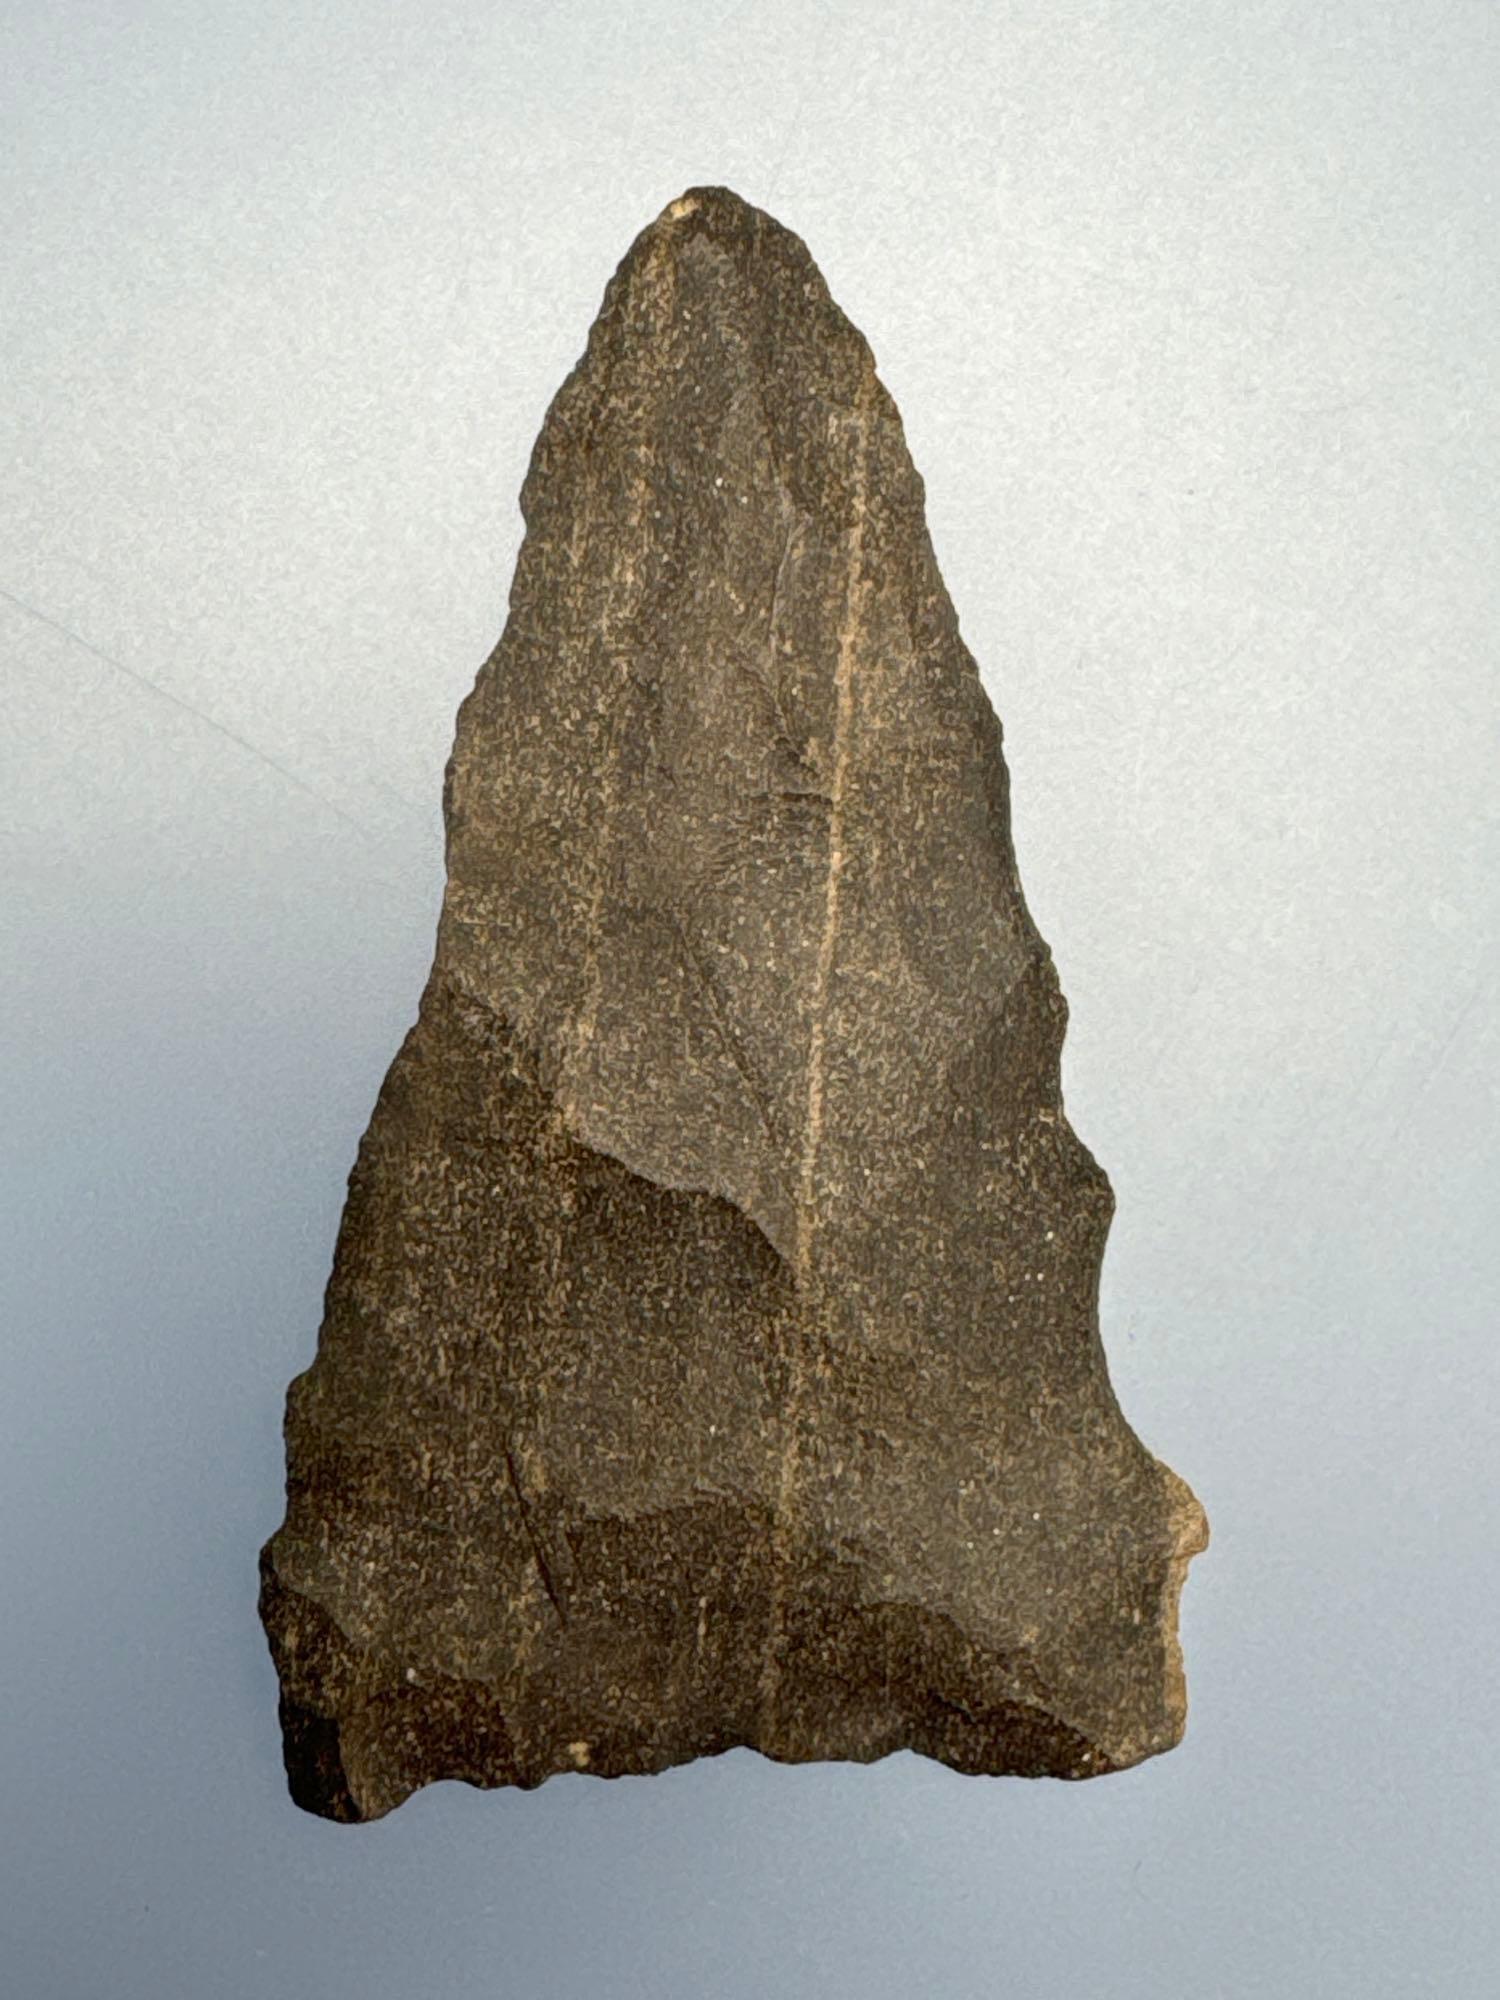 STUNNING 2" Chert Levanna Triangle Point, Found in Erie Co., New York